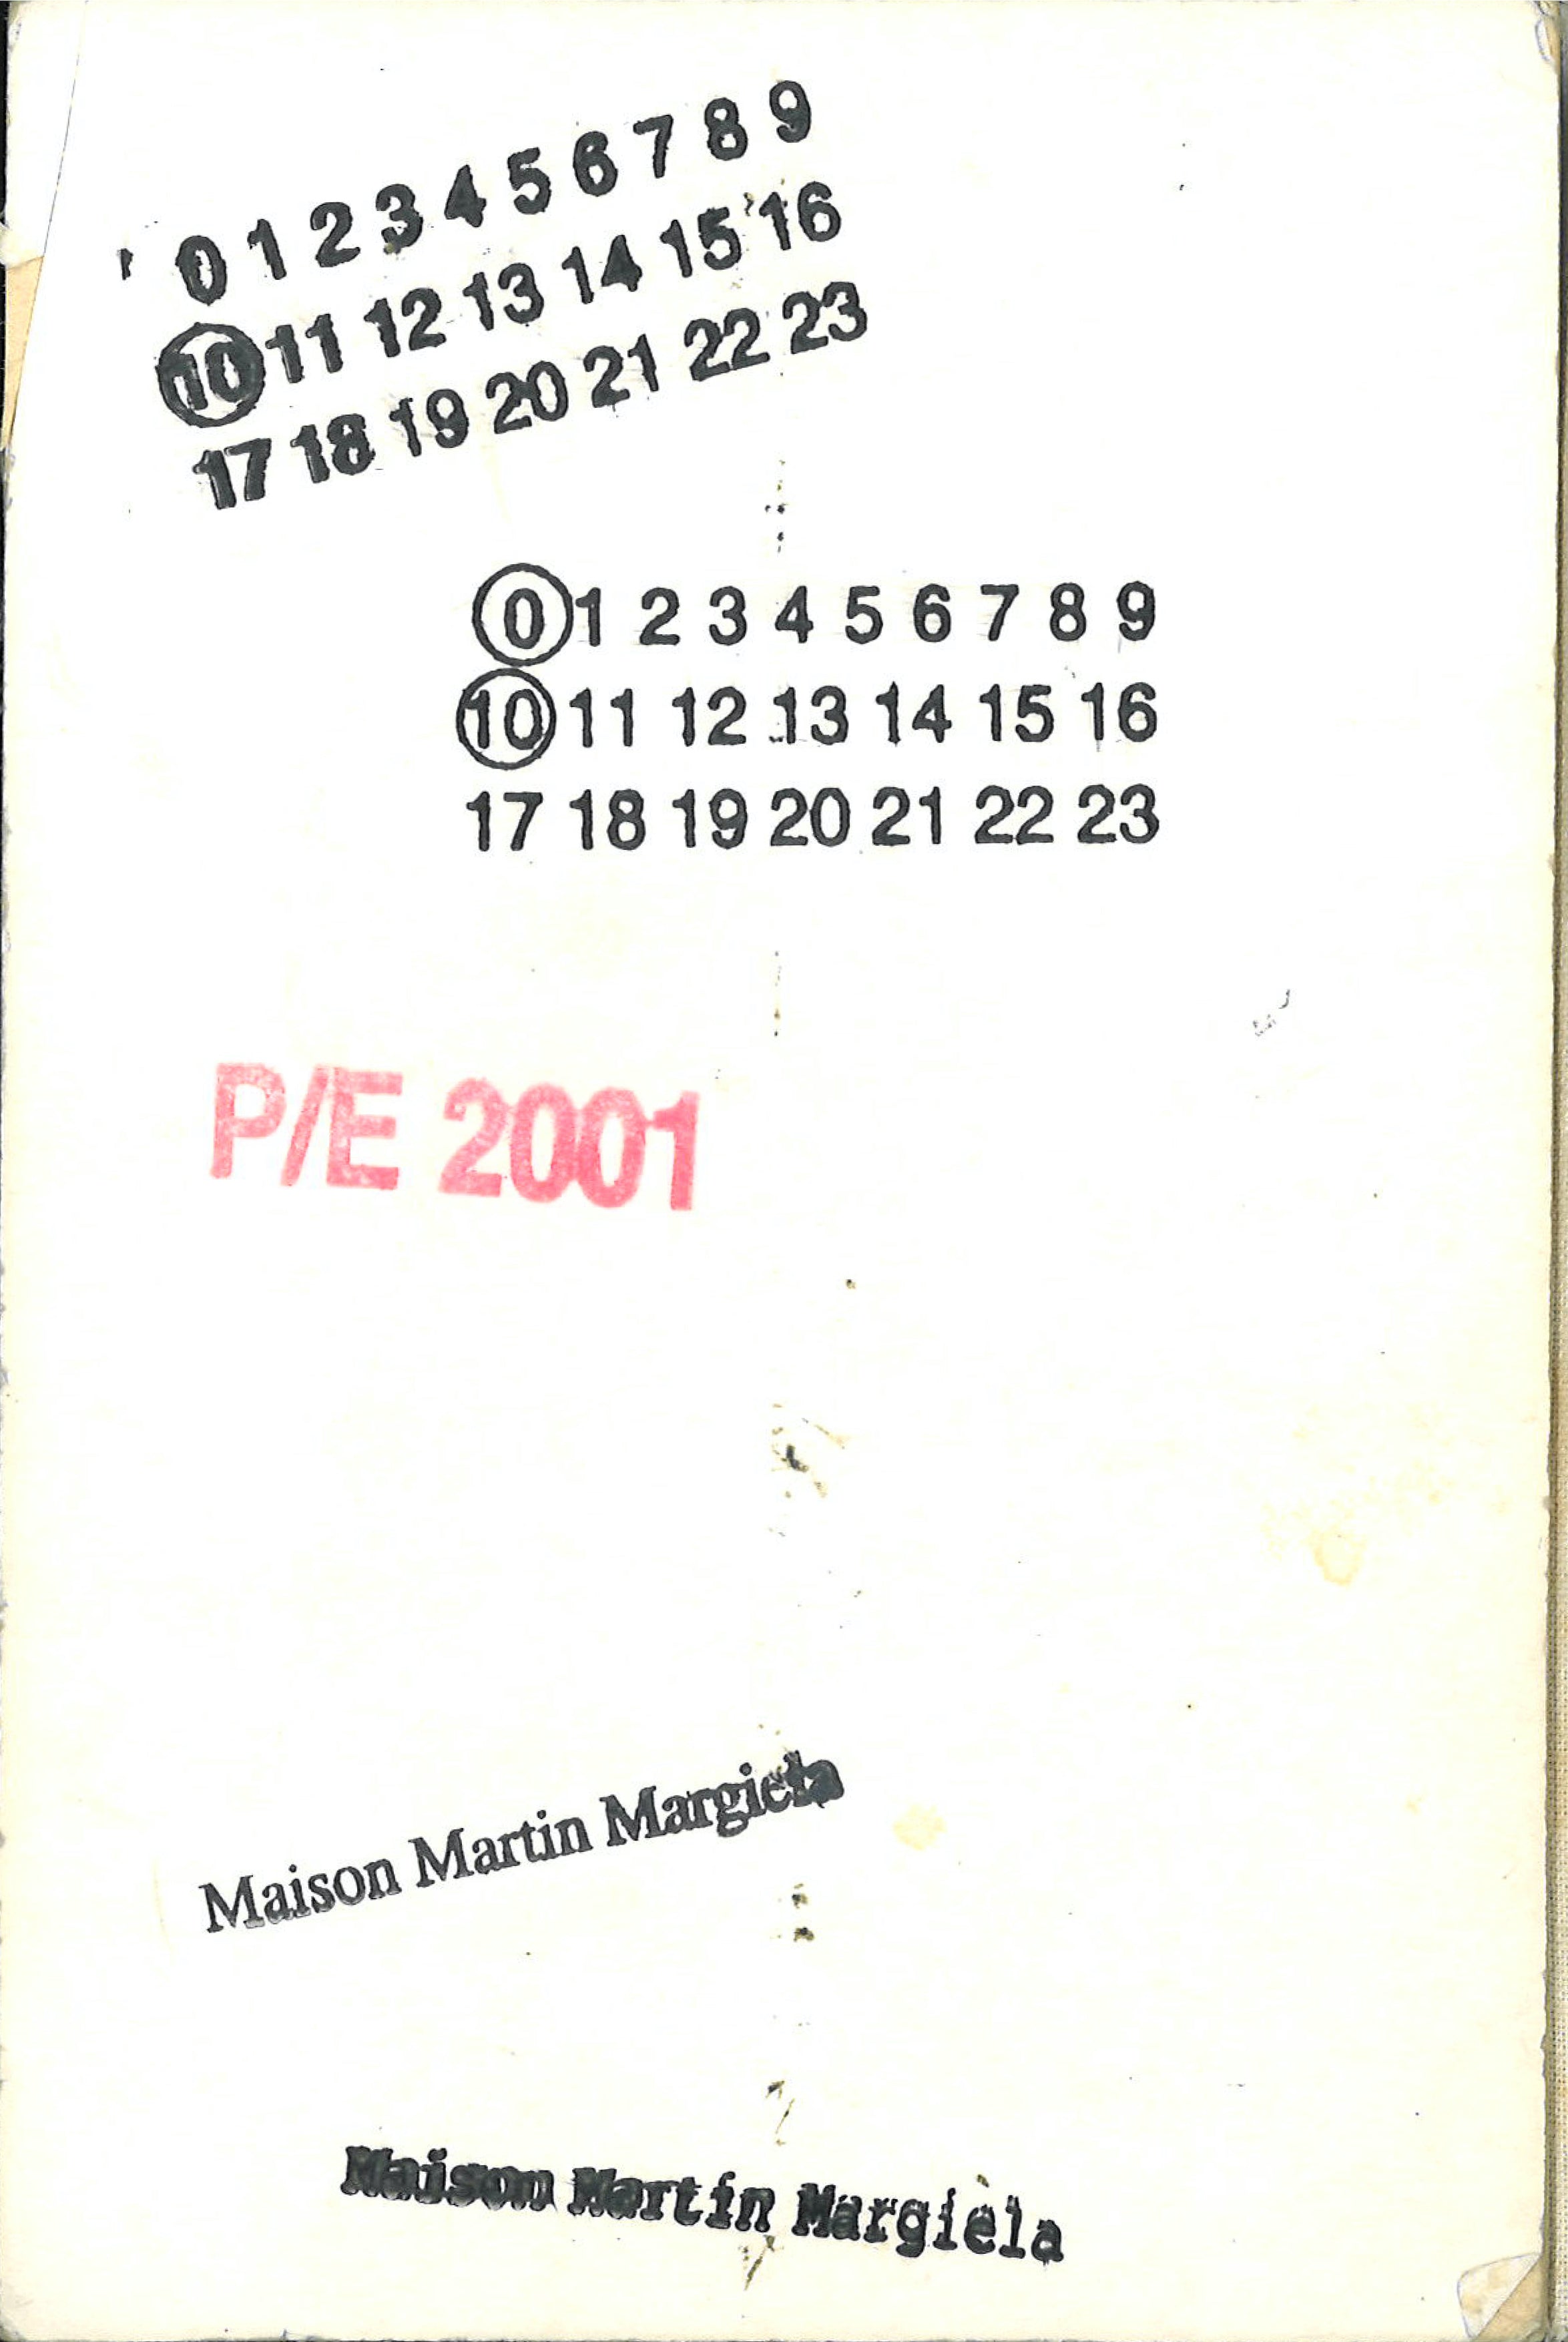 Maison Martin Margiela Lookbook
Menswear Collection Spring/Summer 2001